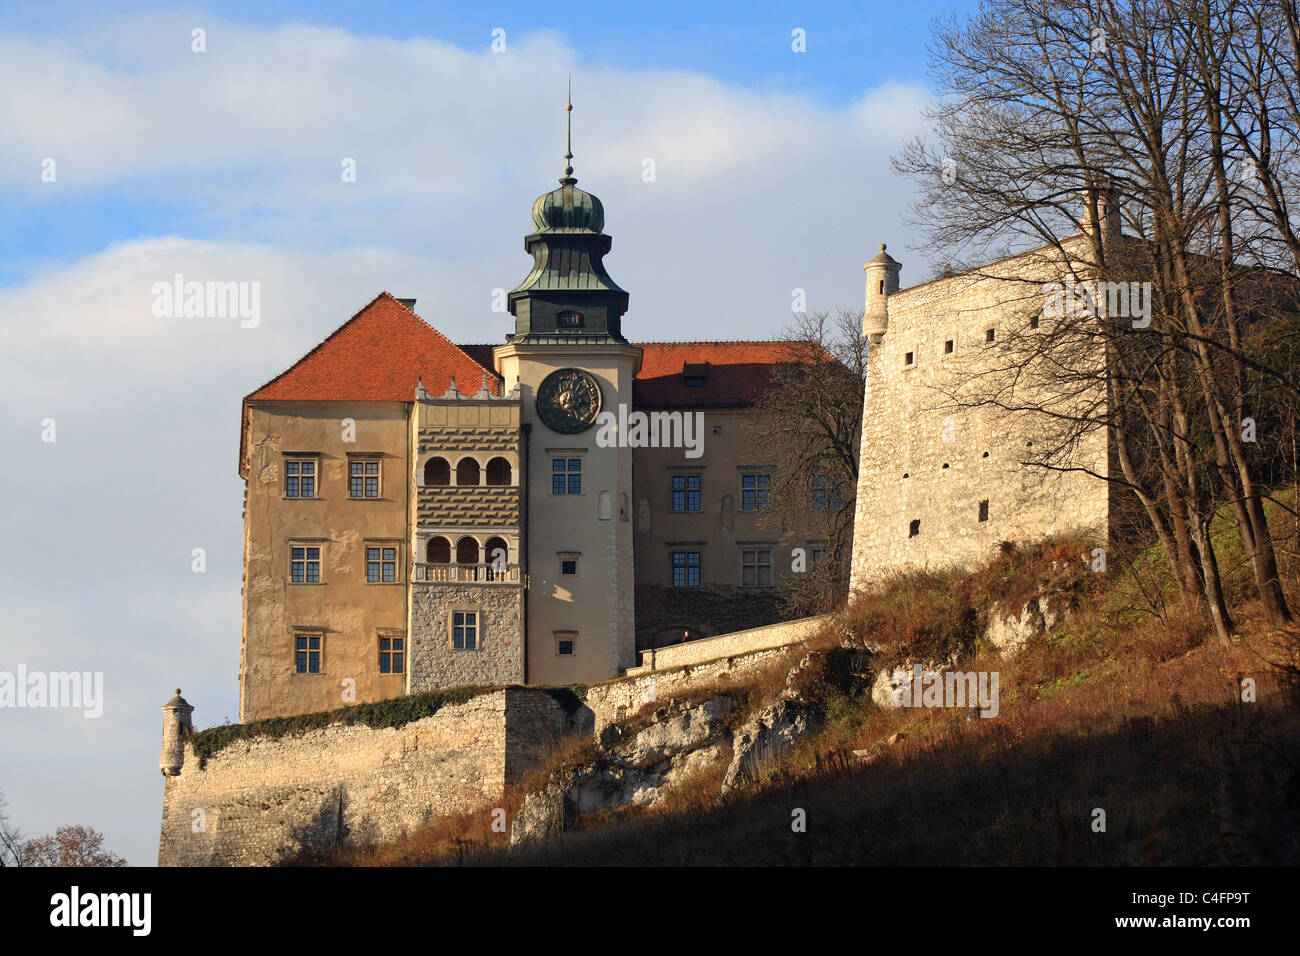 Castle Pieskowa Skala in Ojcowski National Park, Poland Stock Photo